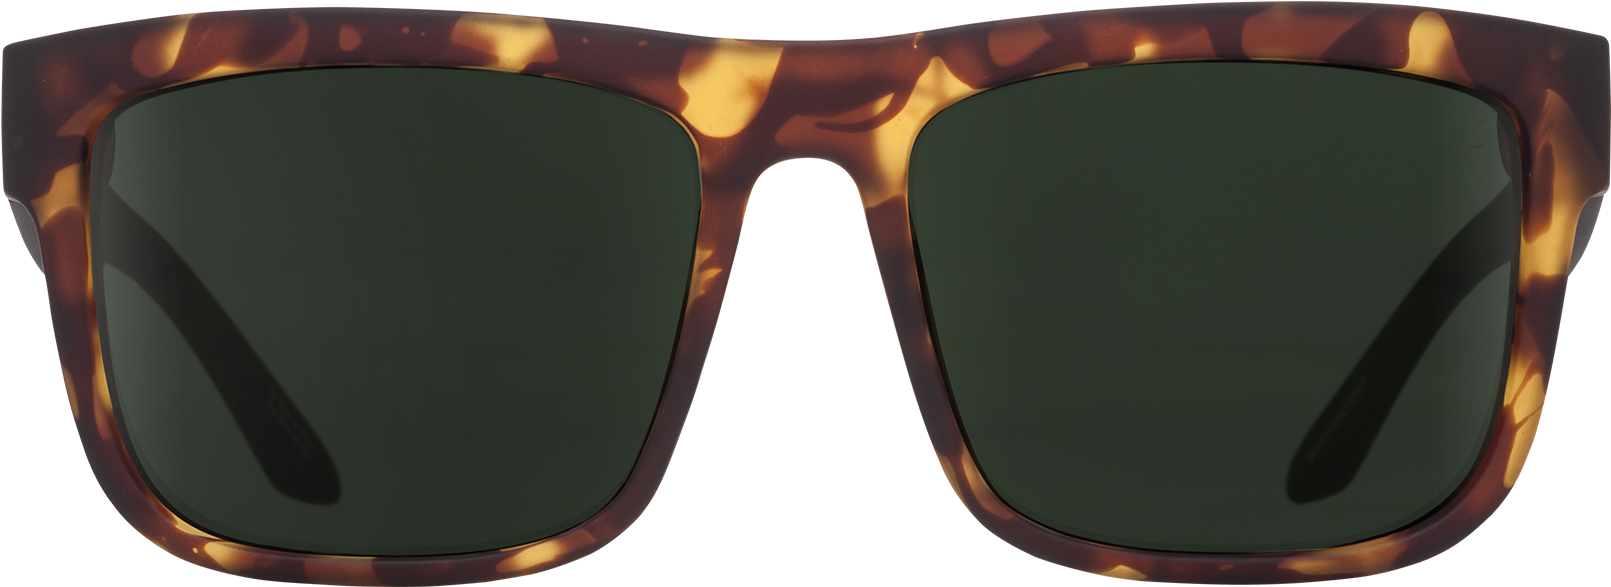 Tortoiseshell Sunglasses Product Image PNG